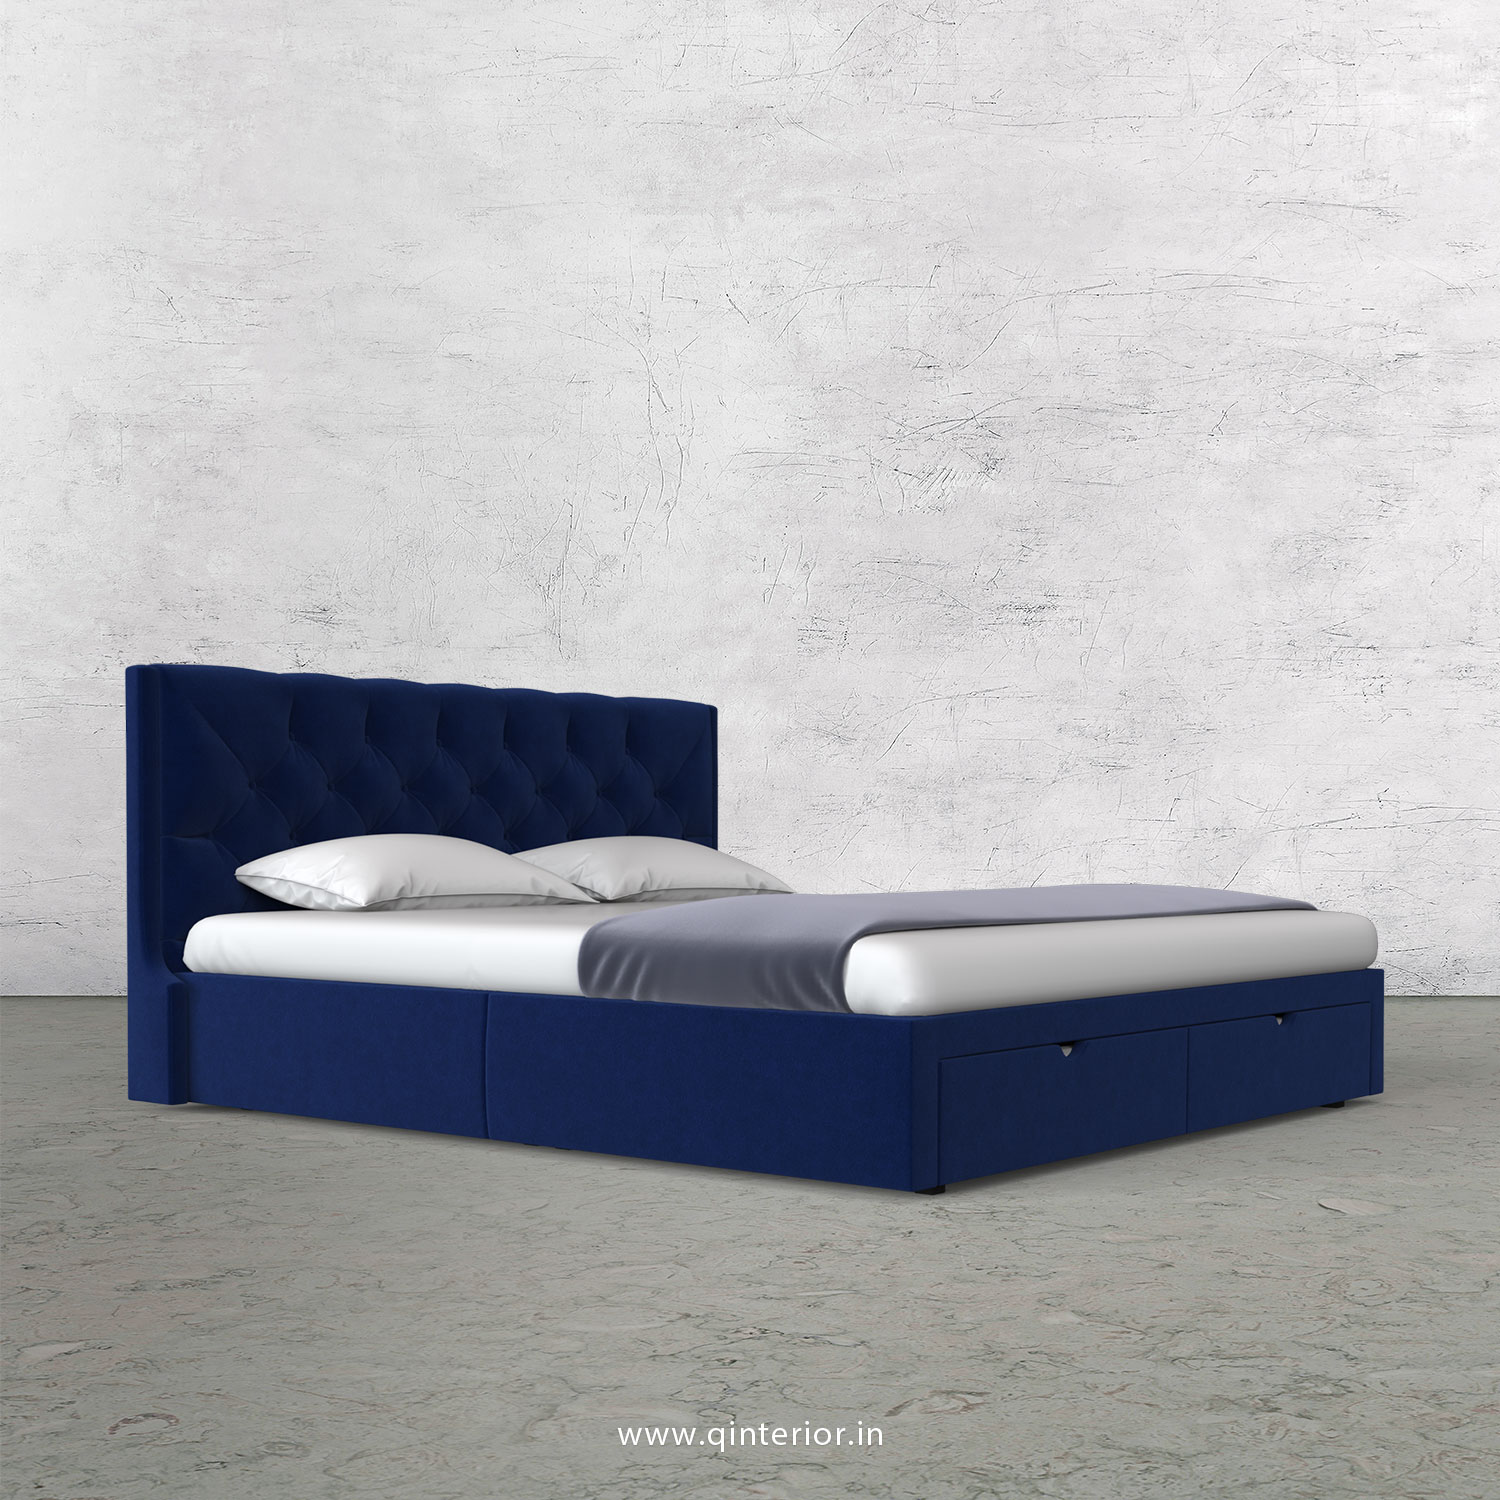 Scorpius King Size Storage Bed in Velvet Fabric - KBD001 VL05